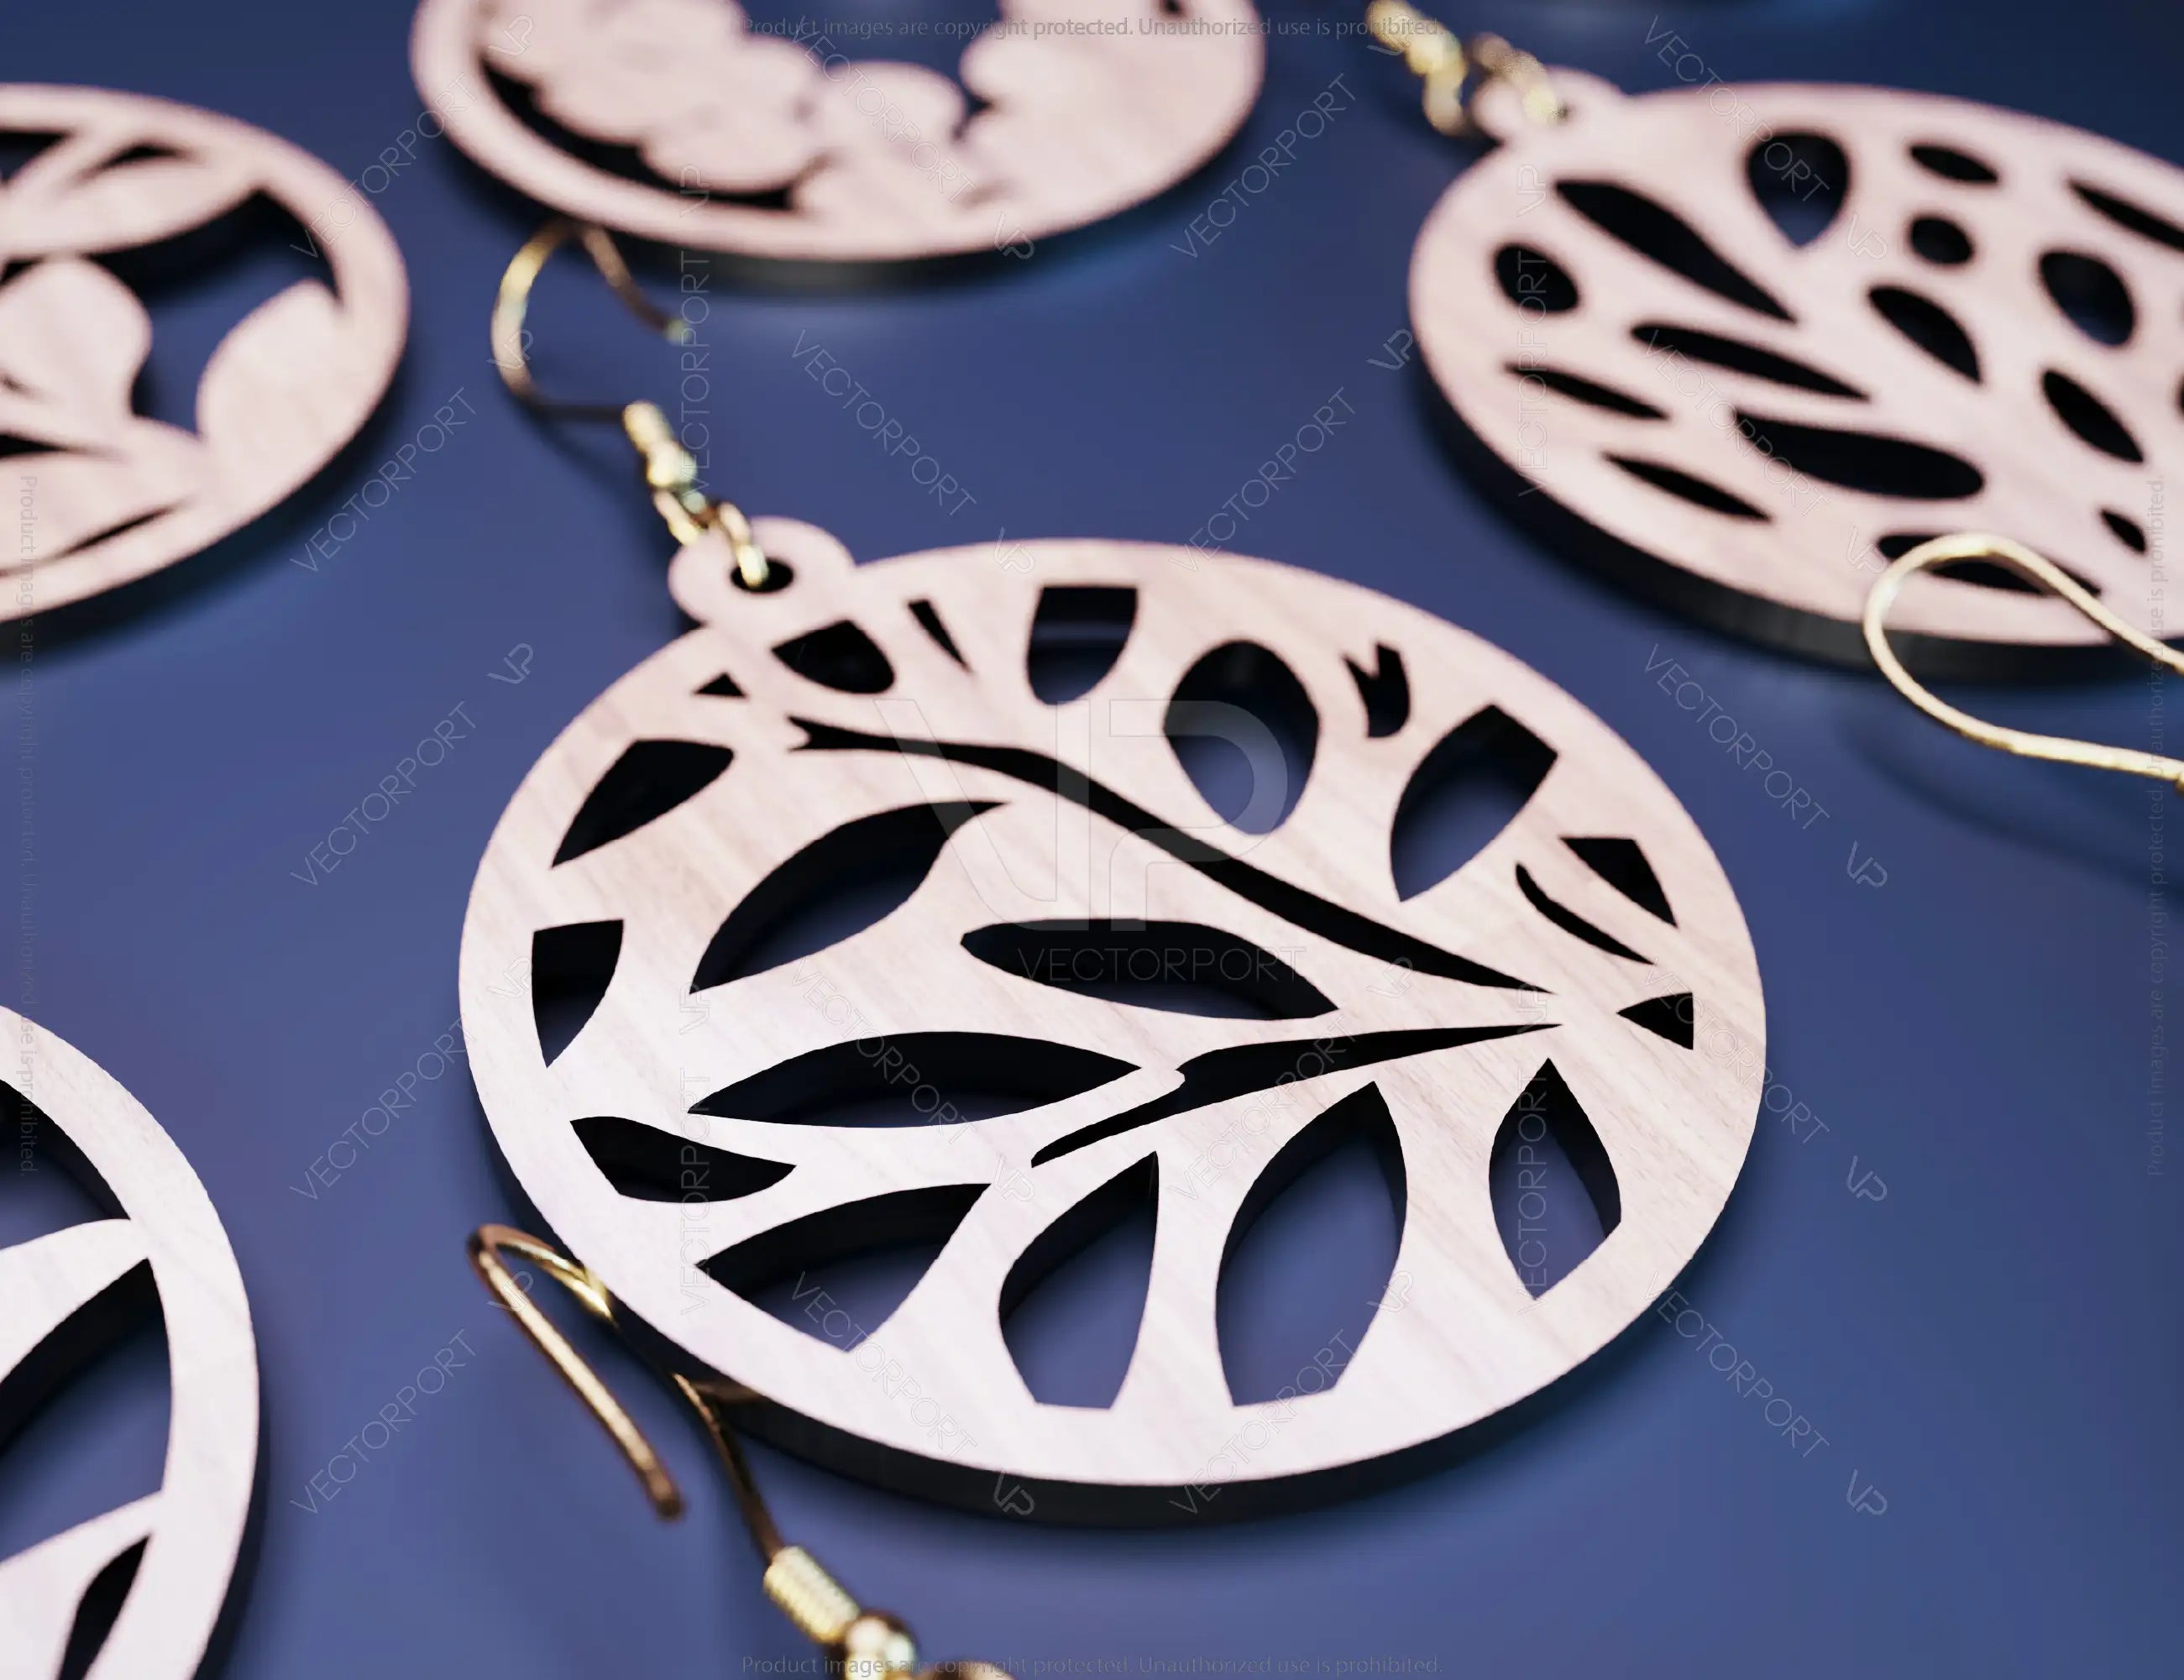 Round Leaves Earring Svg 12 styles Glowforge Cricut Jewelry Pendants laser cut | SVG, DXF, AI |#125|